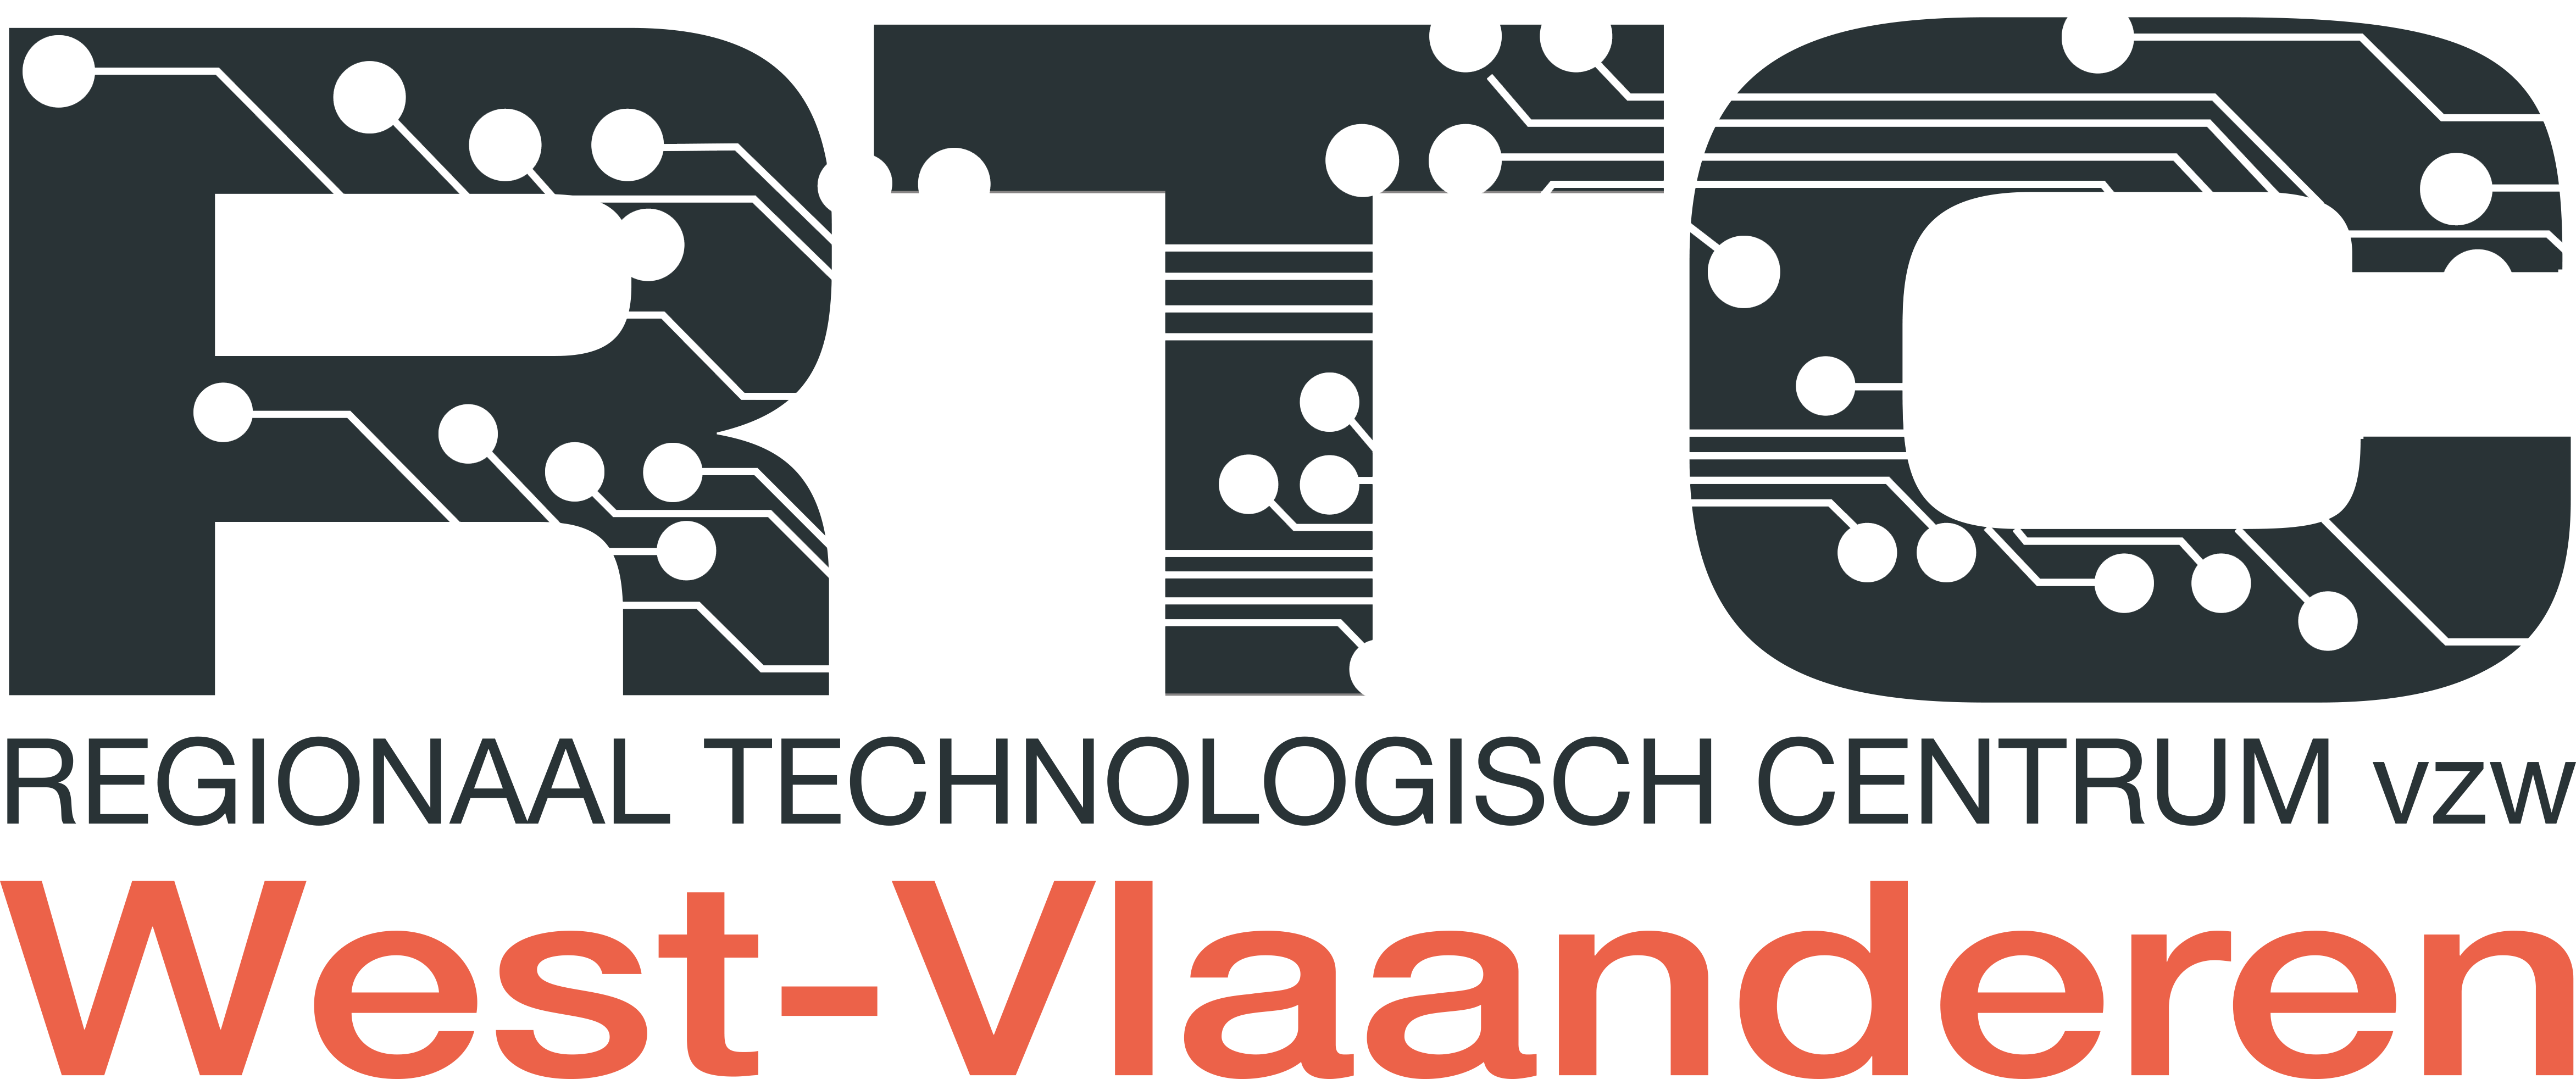 RTC logo_PMS_Oranjerood - donkergrijs kopie